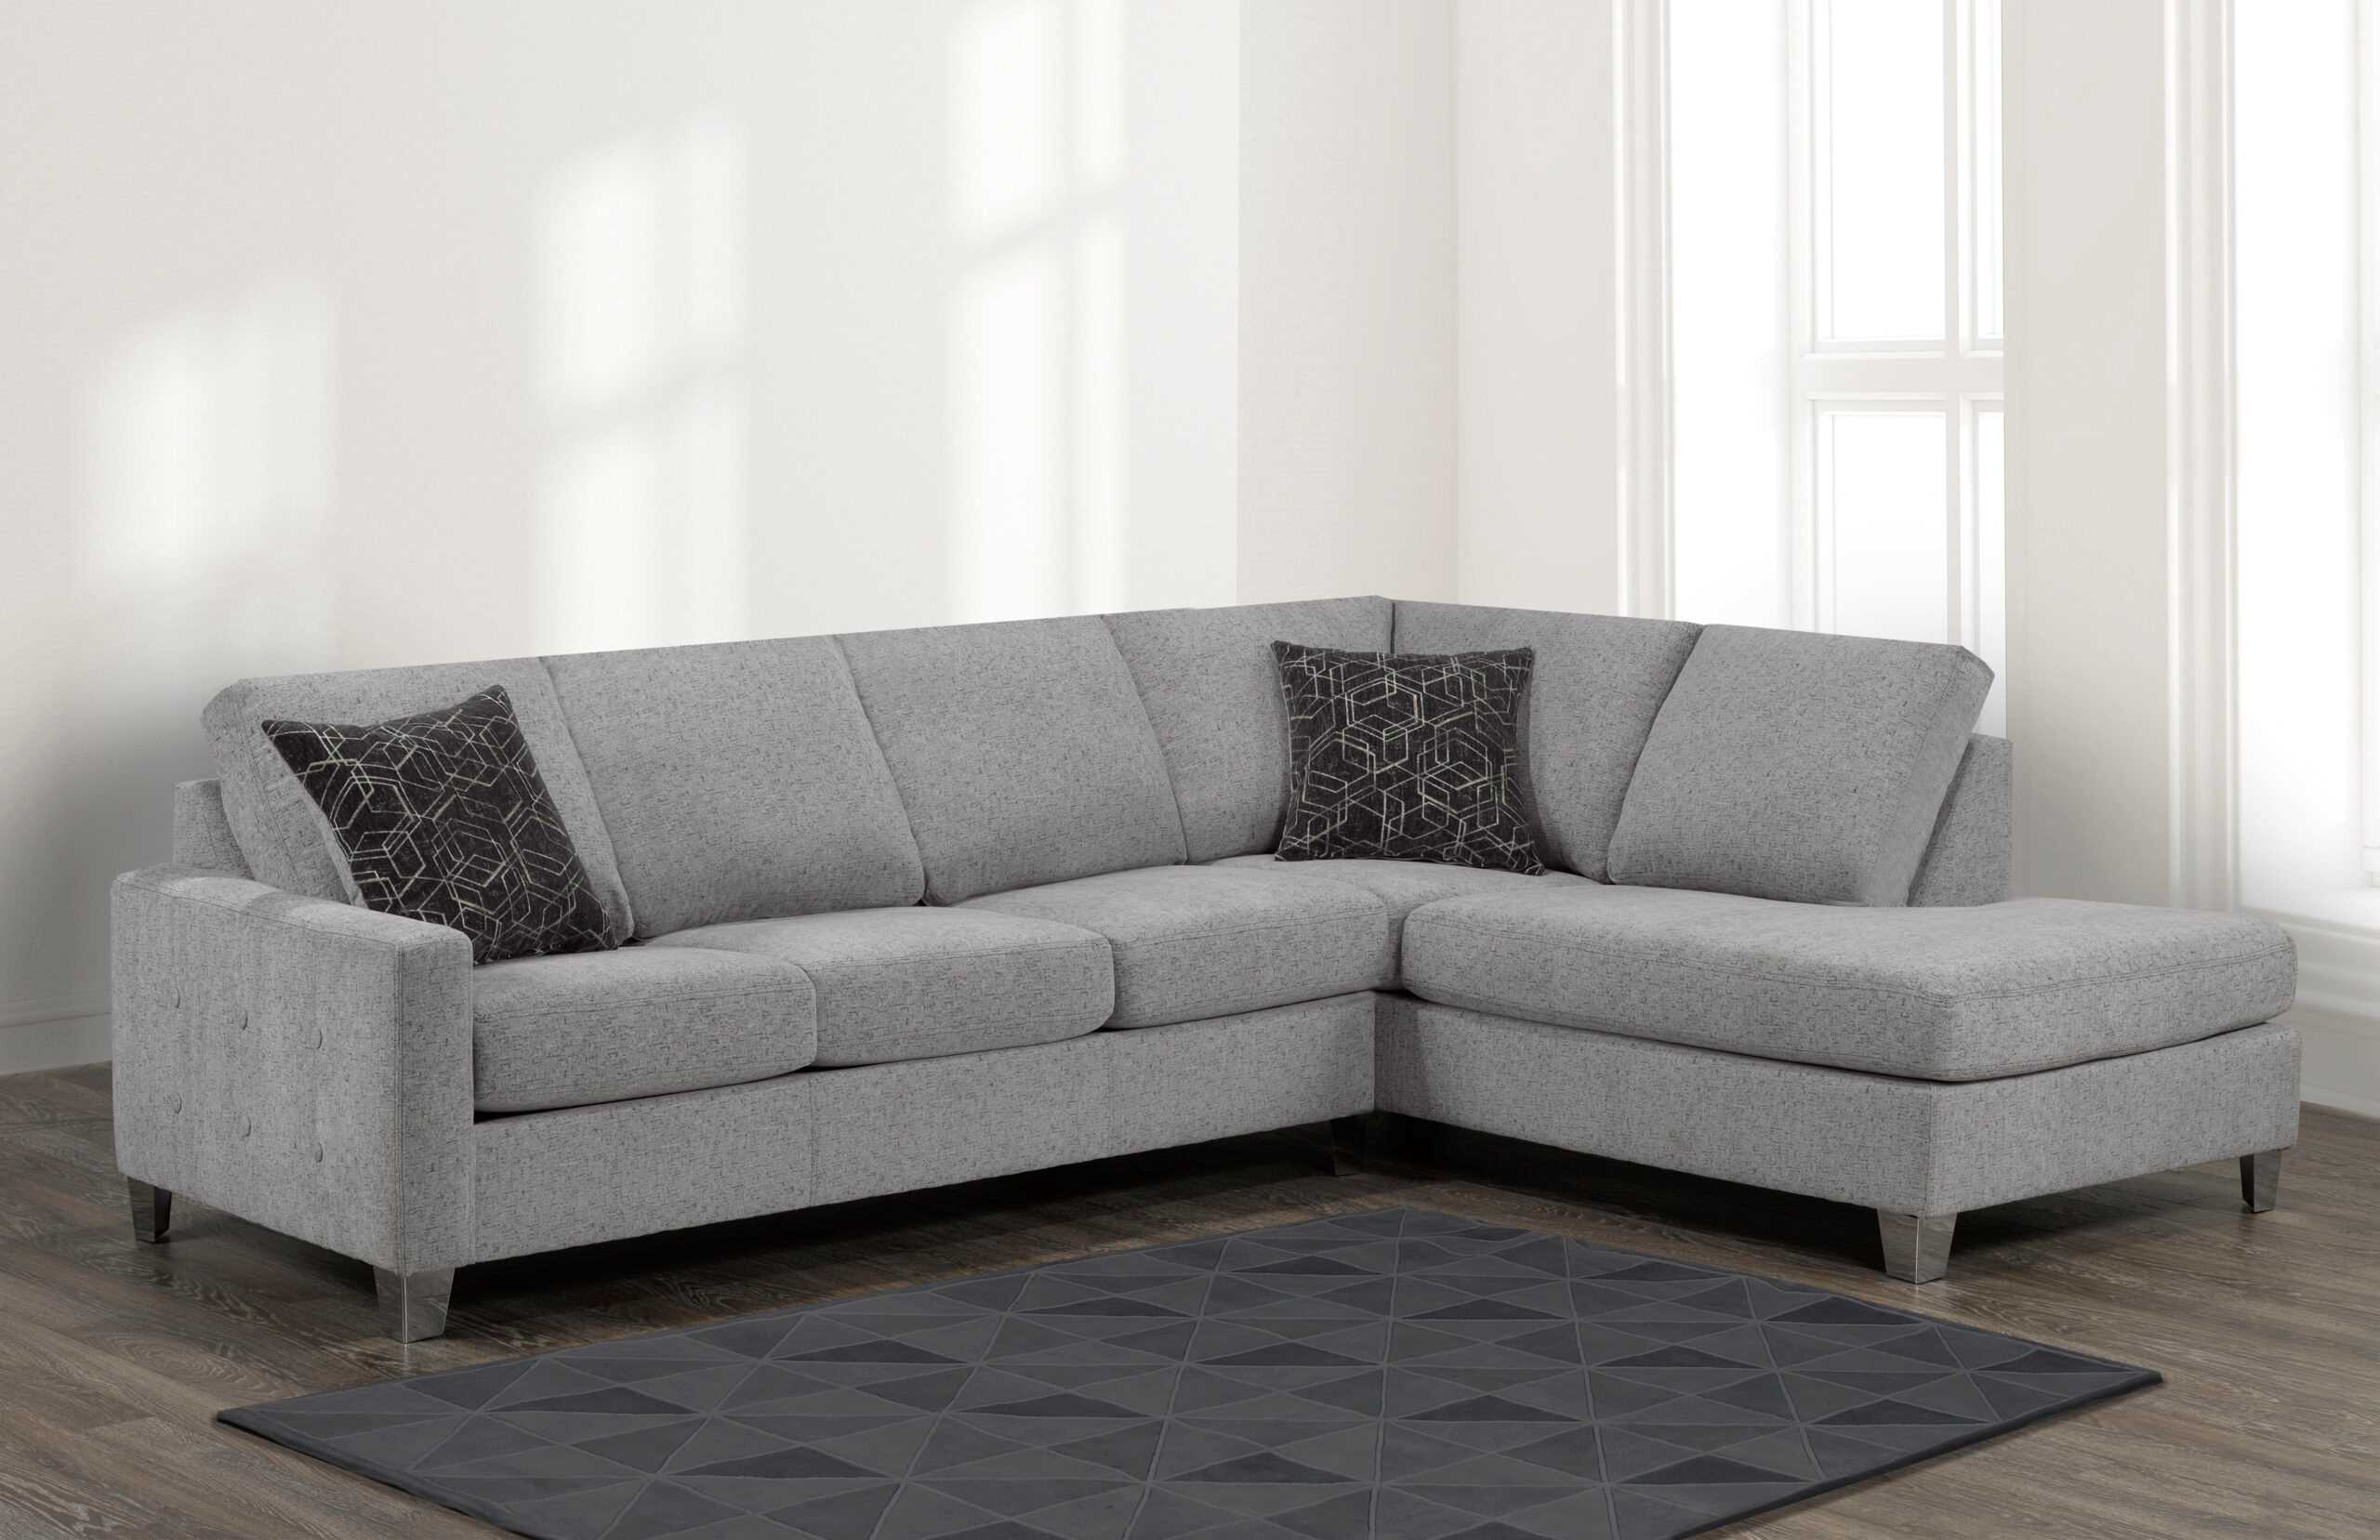 Francesca Ruba Silver Fabric Sectional Sofa 9851